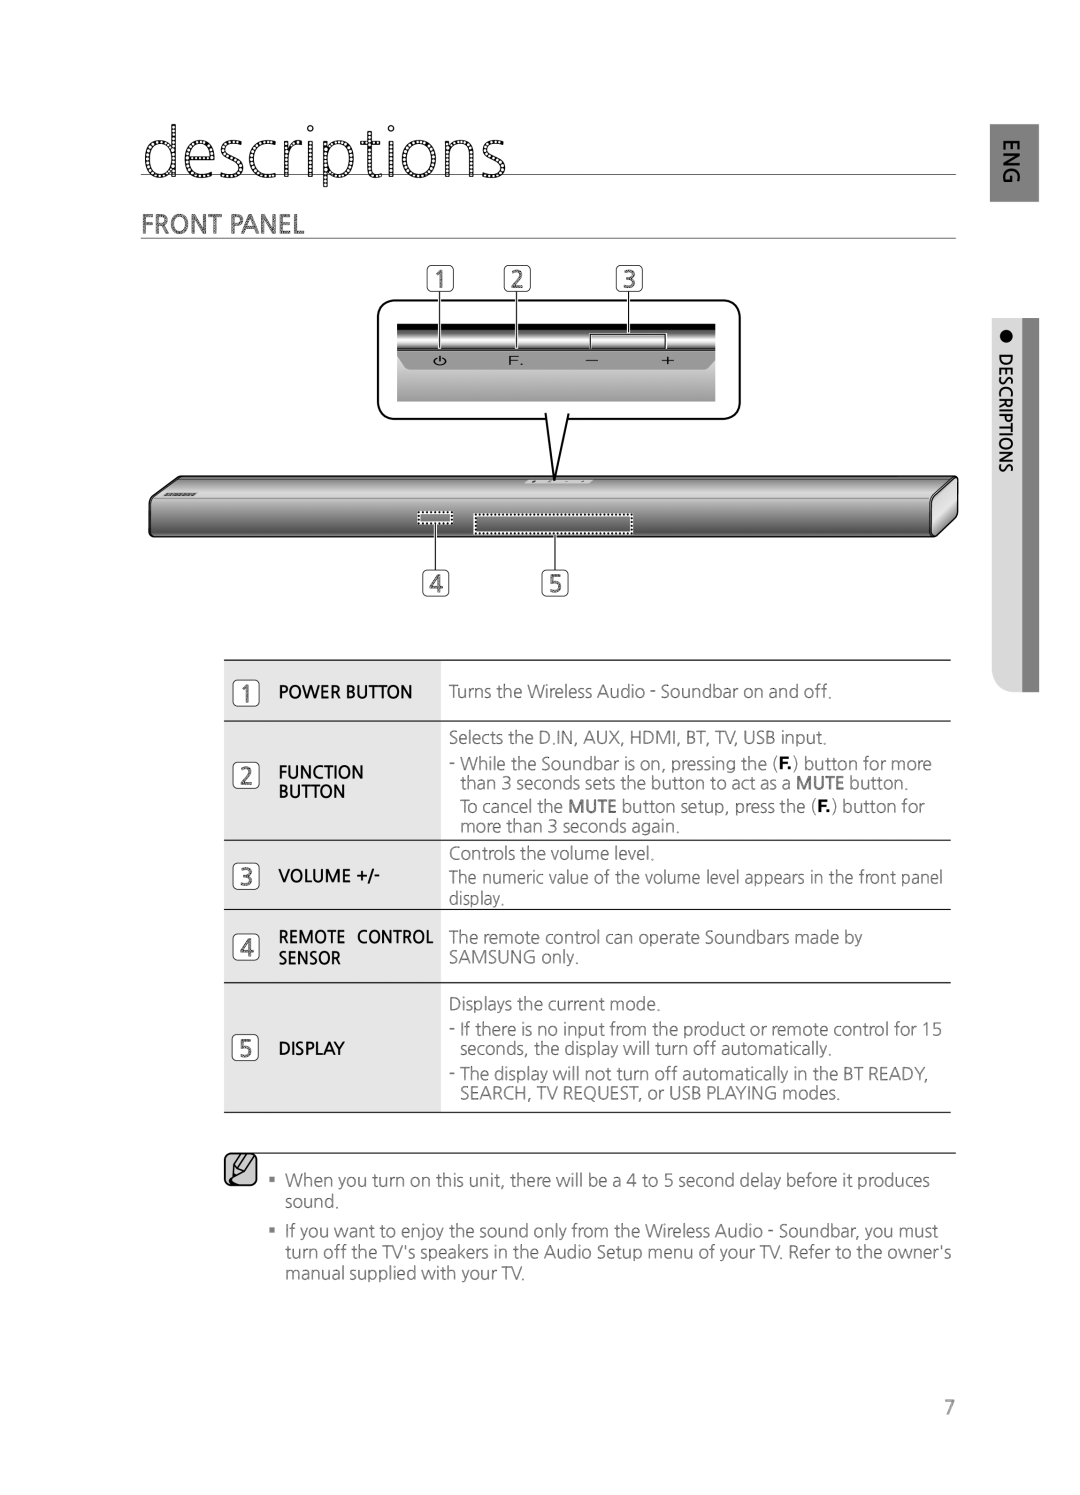 Samsung HW-H551/ZA, HWH550, HWH551, HW-H550/ZA user manual Front Panel, descriptions 